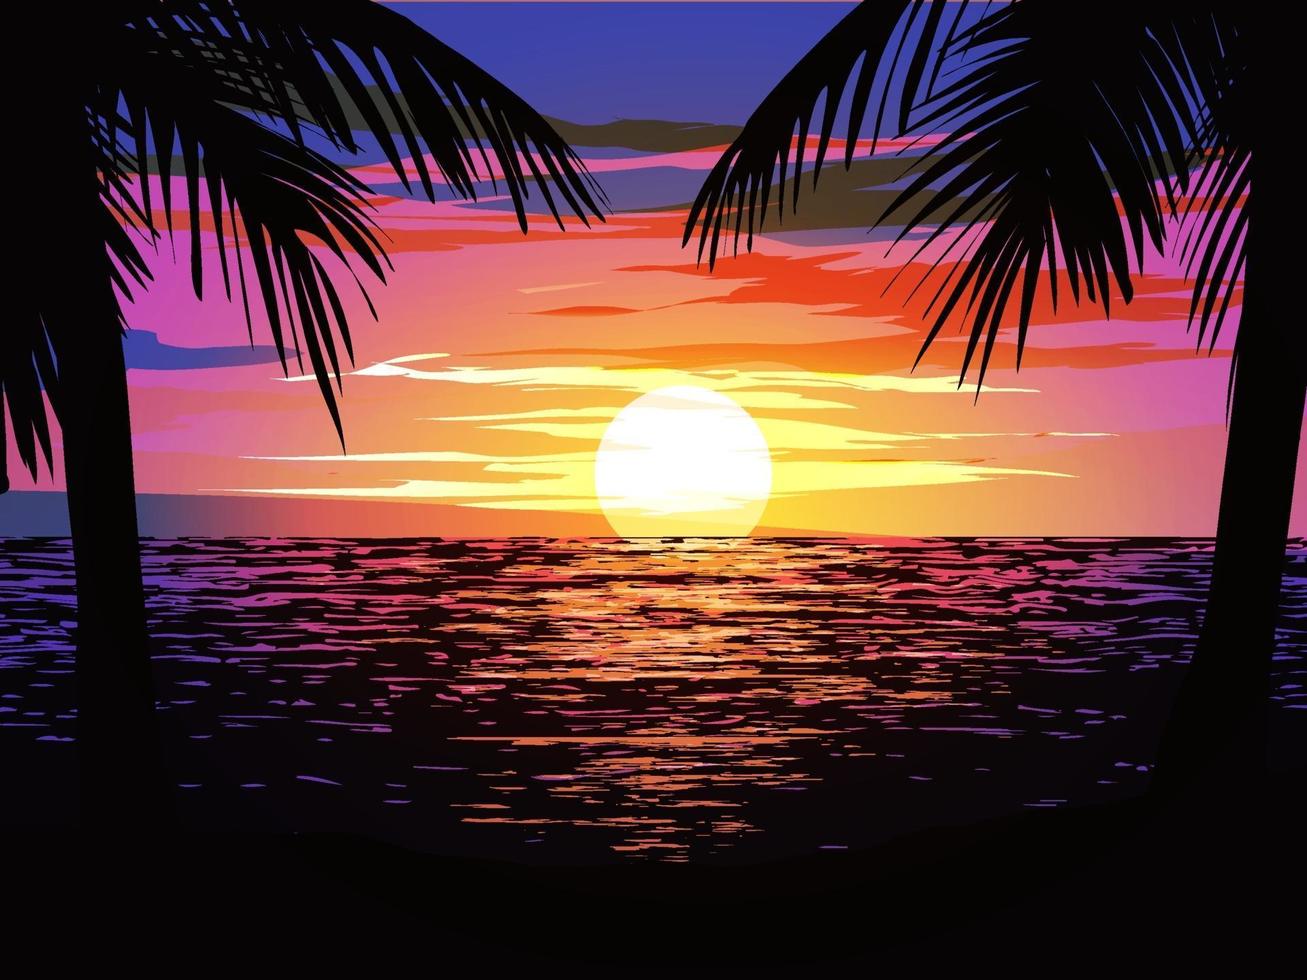 Beach Sunset Scene Illustration vector